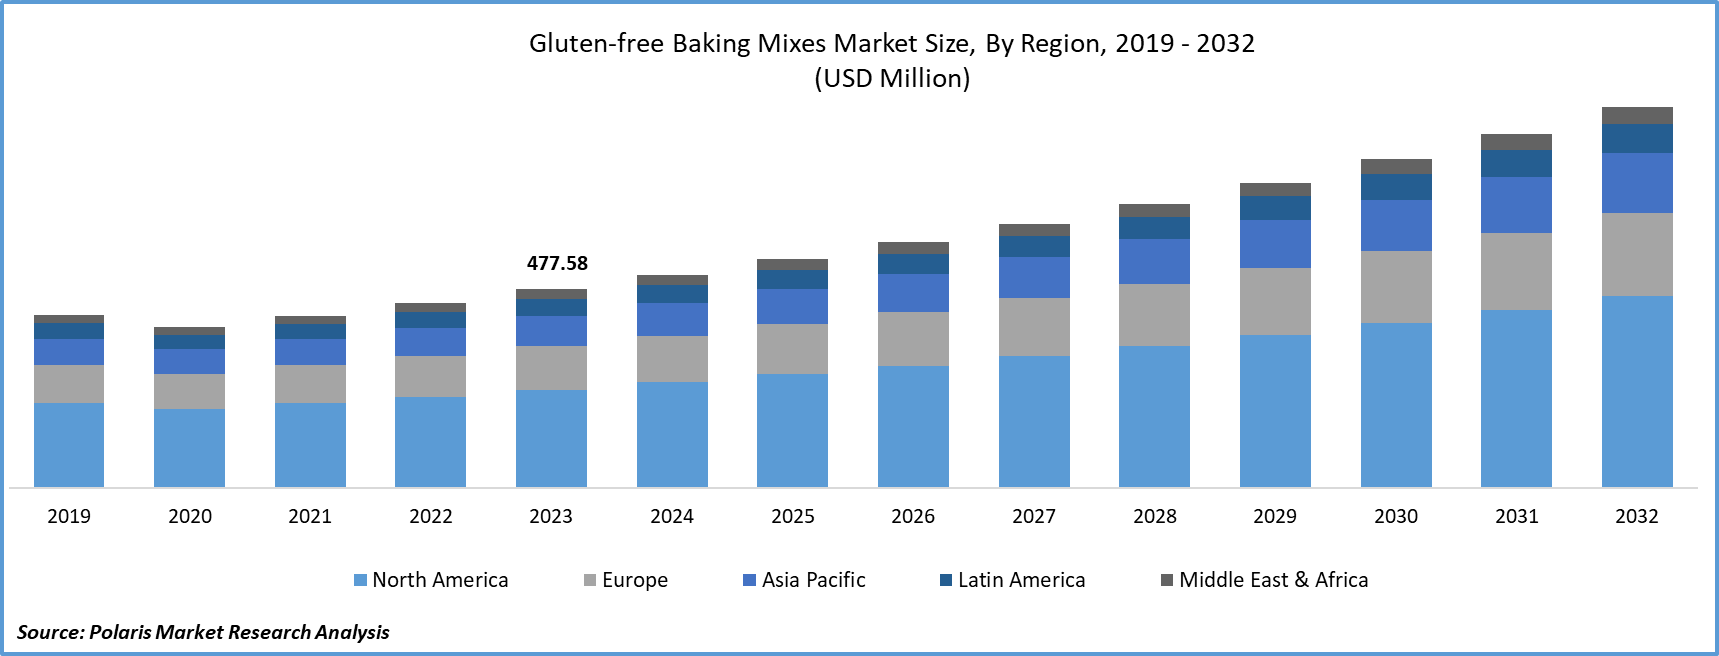 Gluten-free Baking Mixes Market Size